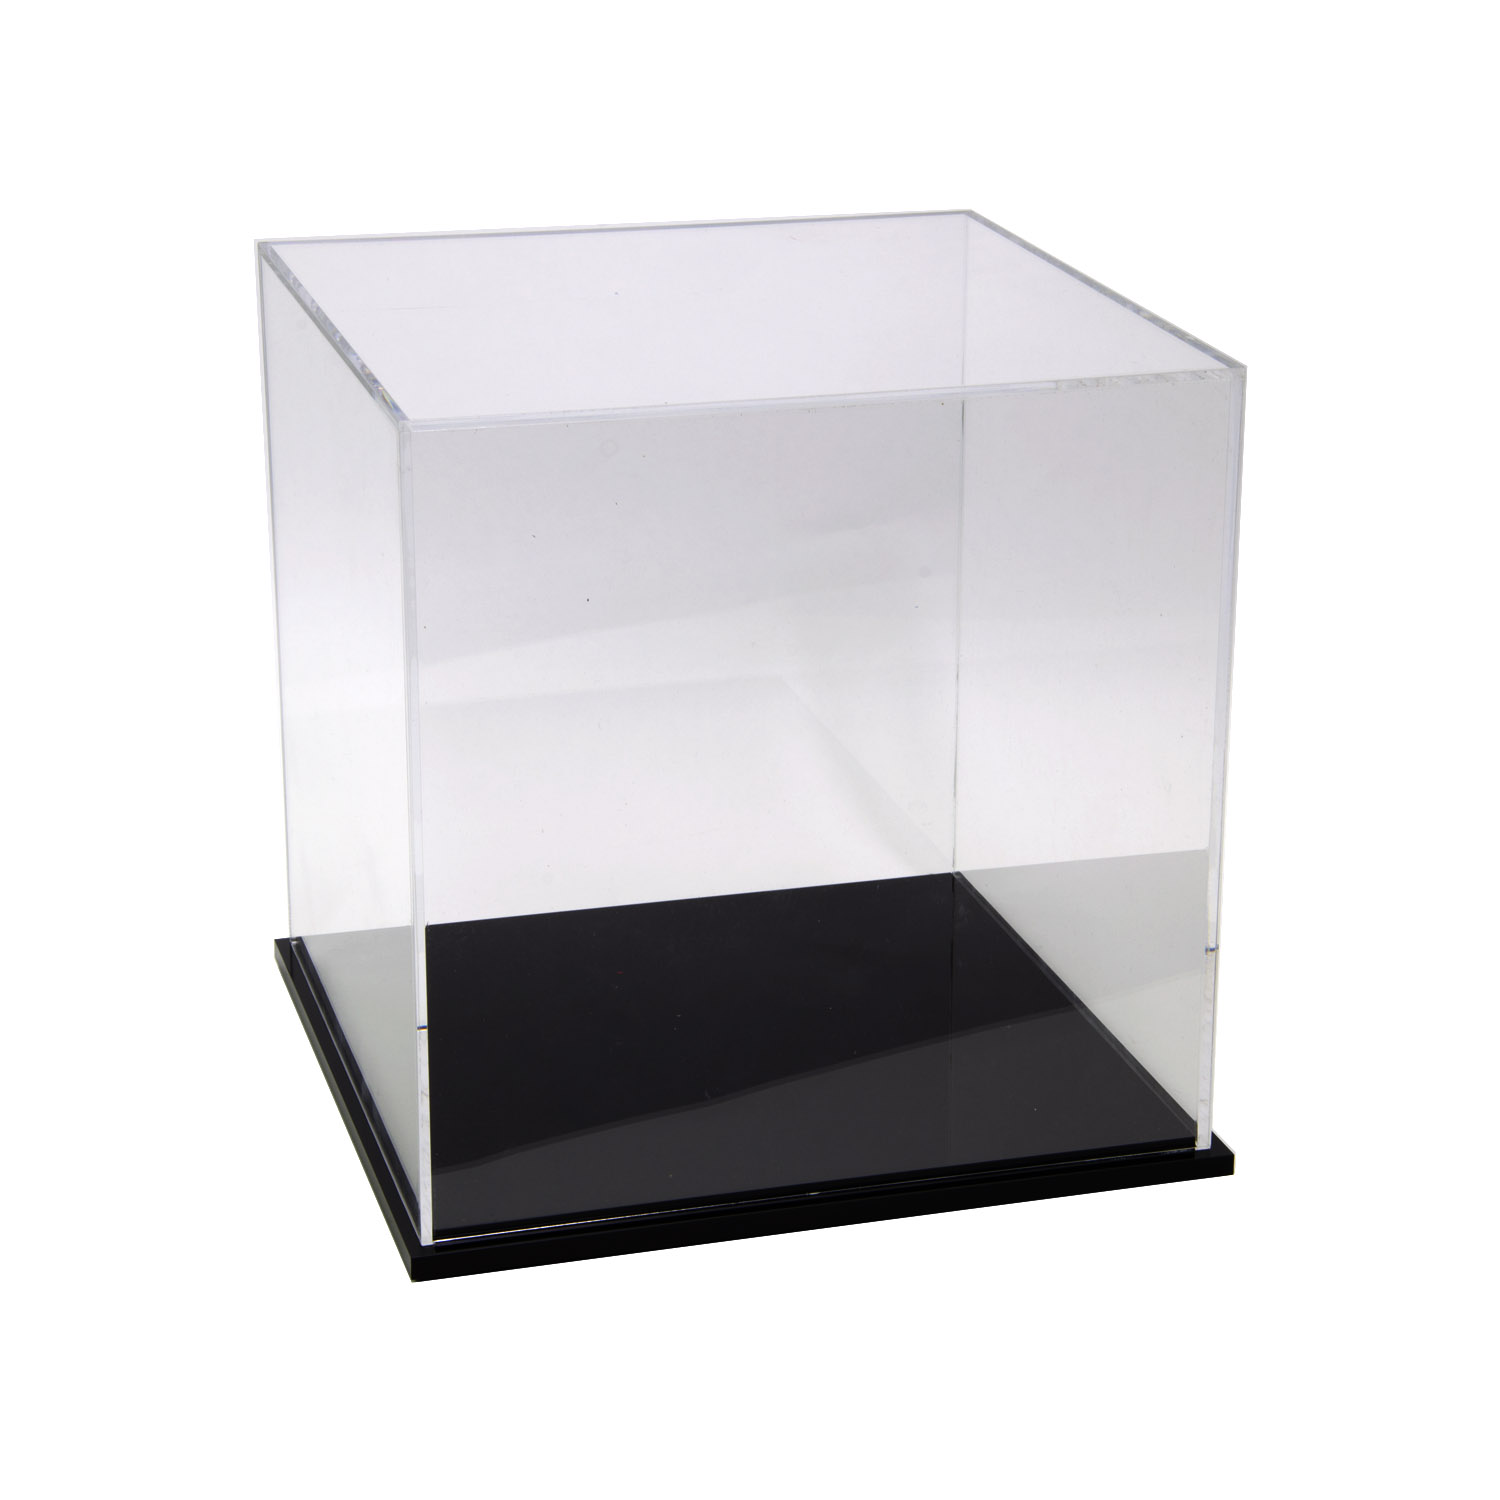 Acrylic Lucite Countertop Display Case ShowCase Box Cabinet 14" x 4 1/4" x 16"h 